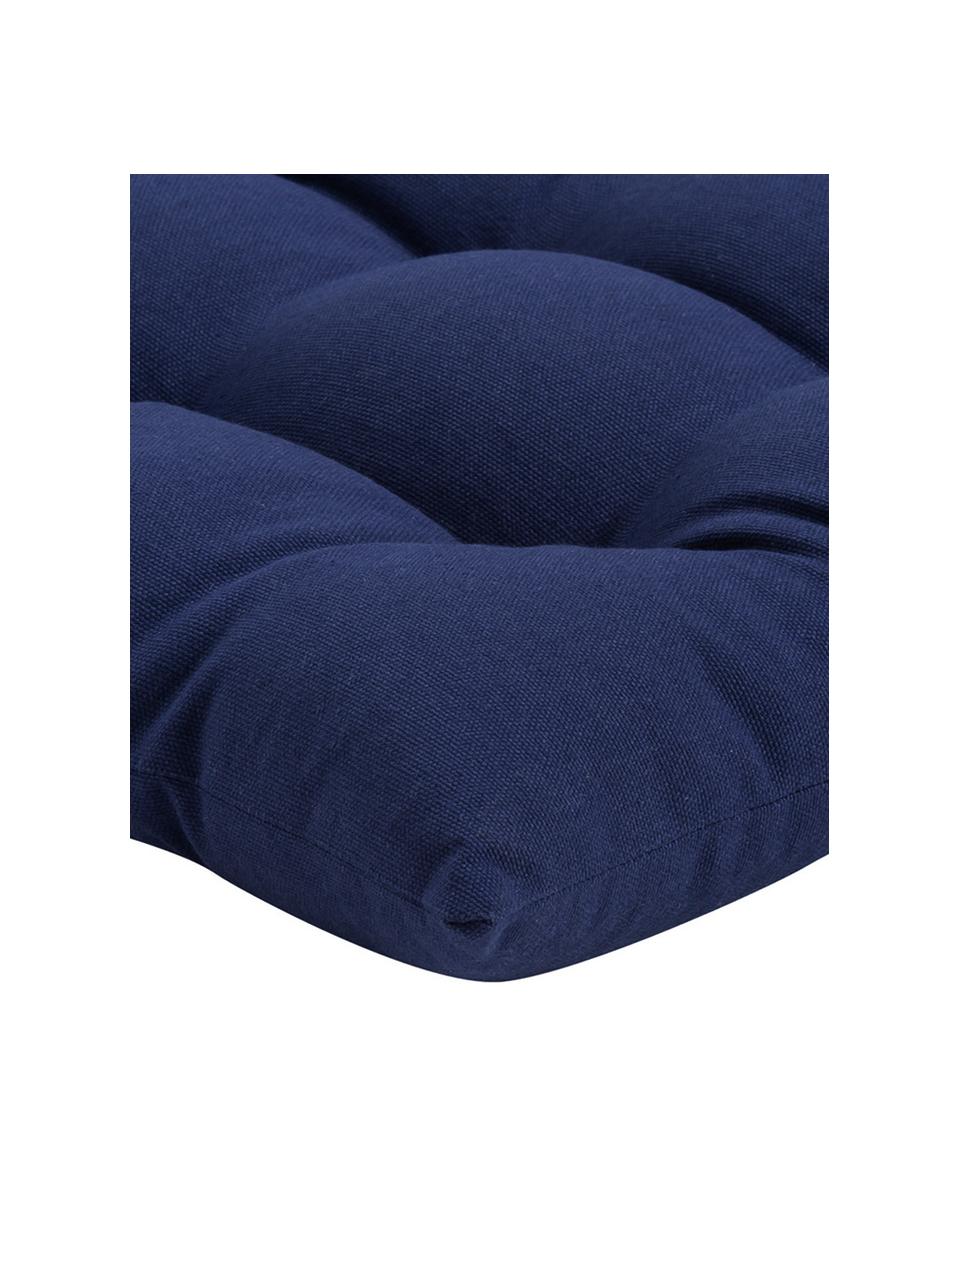 Cuscino sedia in cotone blu navy Ava, Rivestimento: 100% cotone, Blu navy, Larg. 40 x Lung. 40 cm